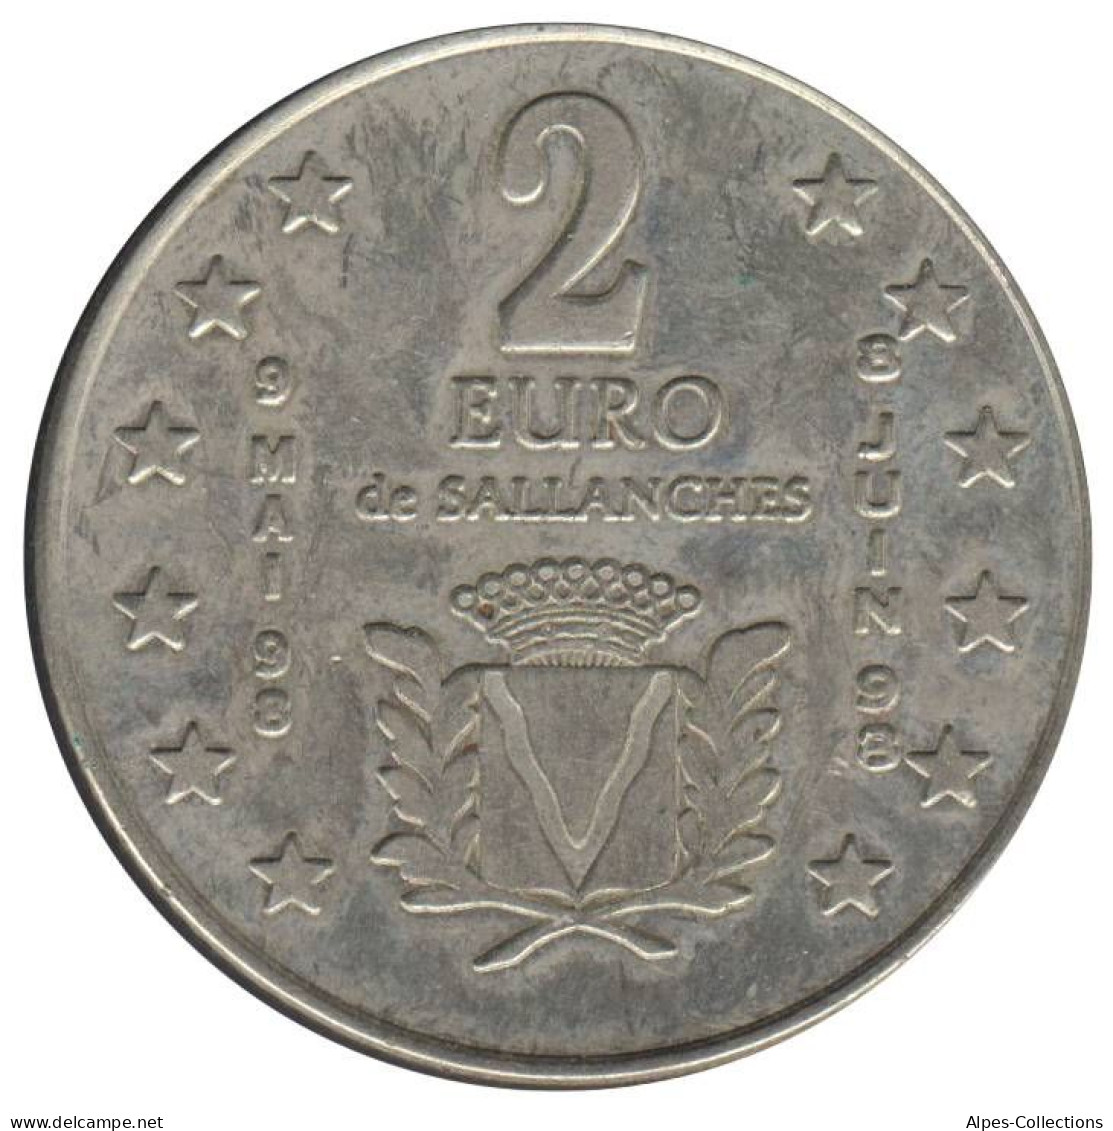 SALLANCHES - EU0020.2 - 2 EURO DES VILLES - Réf: NR - 1998 - Euro Der Städte